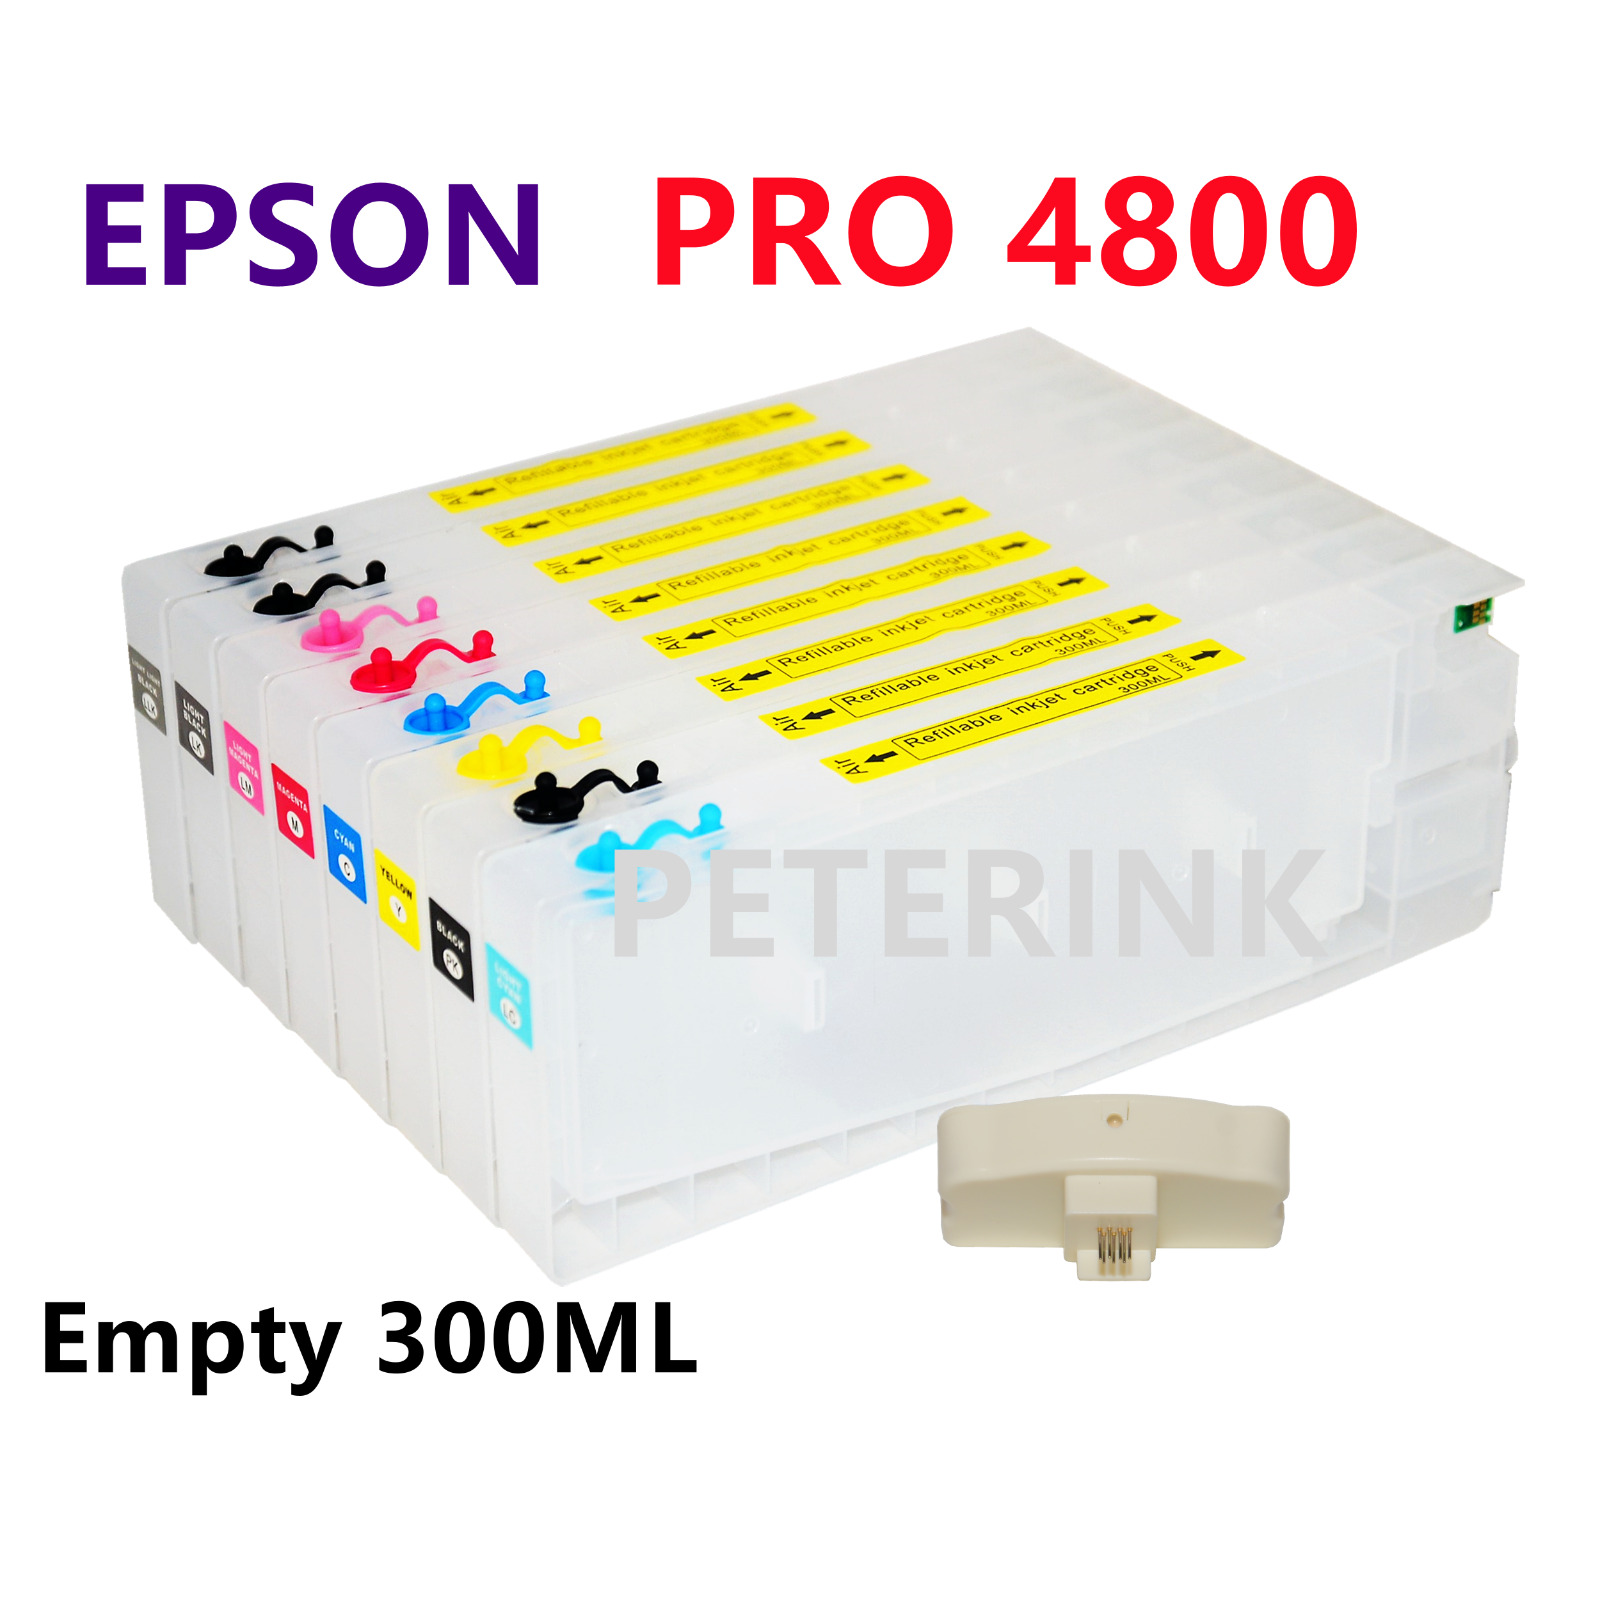 8 Empty Refillable Ink Cartridge kit for Stylus Pro 4880 4800 Printer *